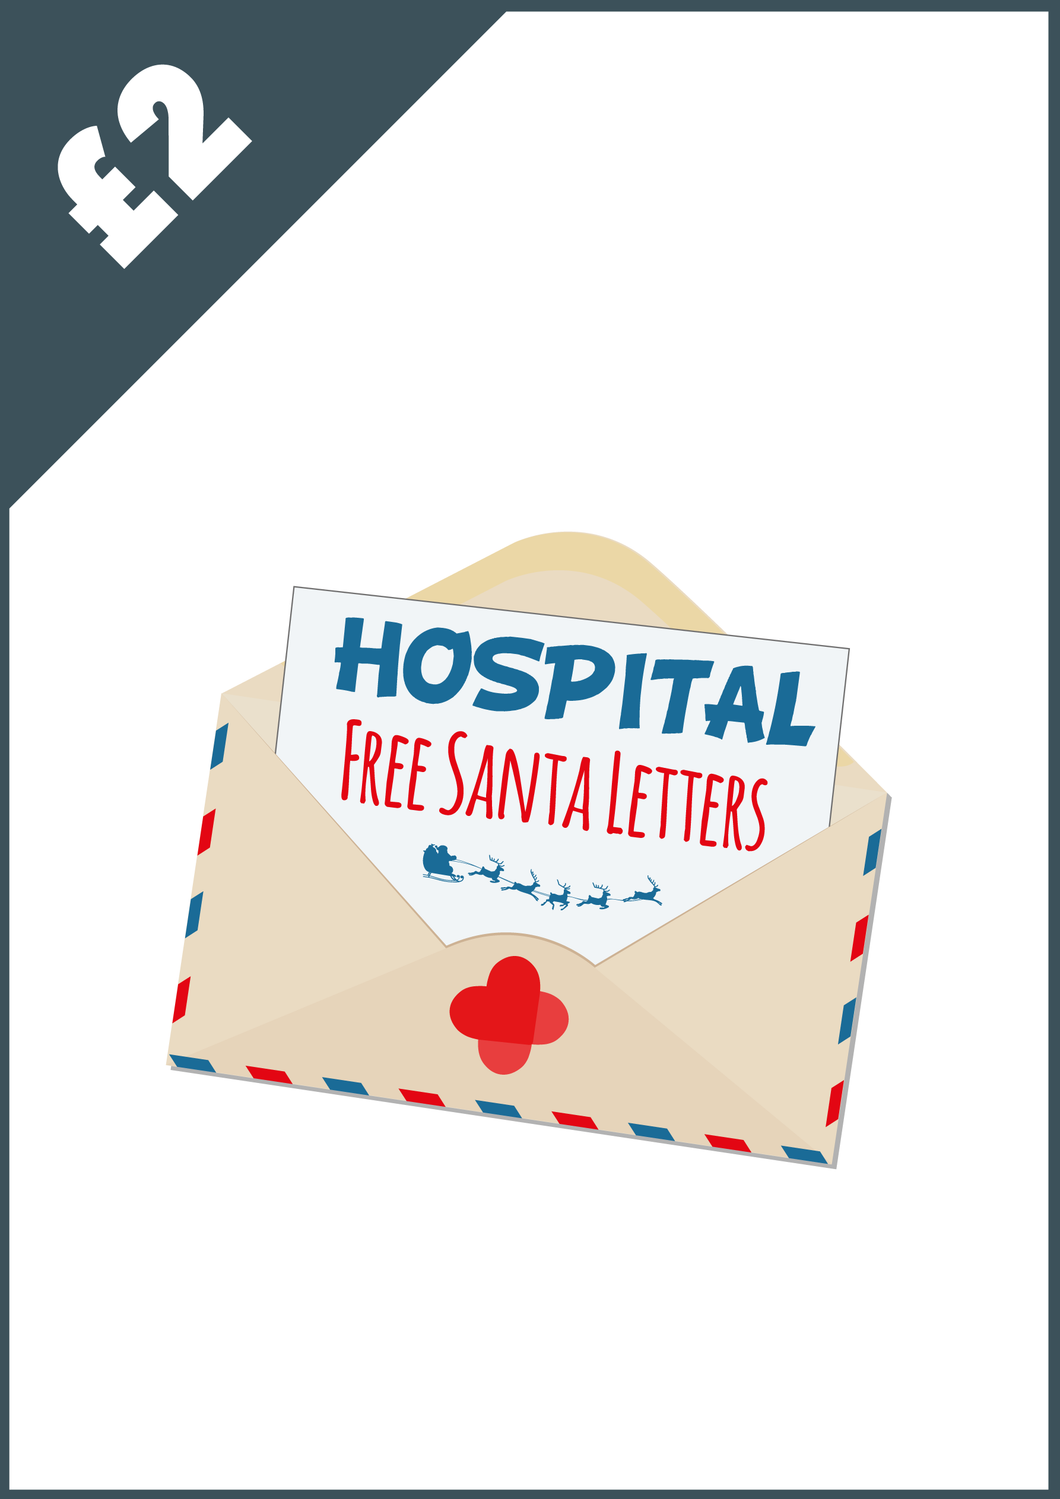 Donate £2 - Free Santa Letters for Children in Hospital